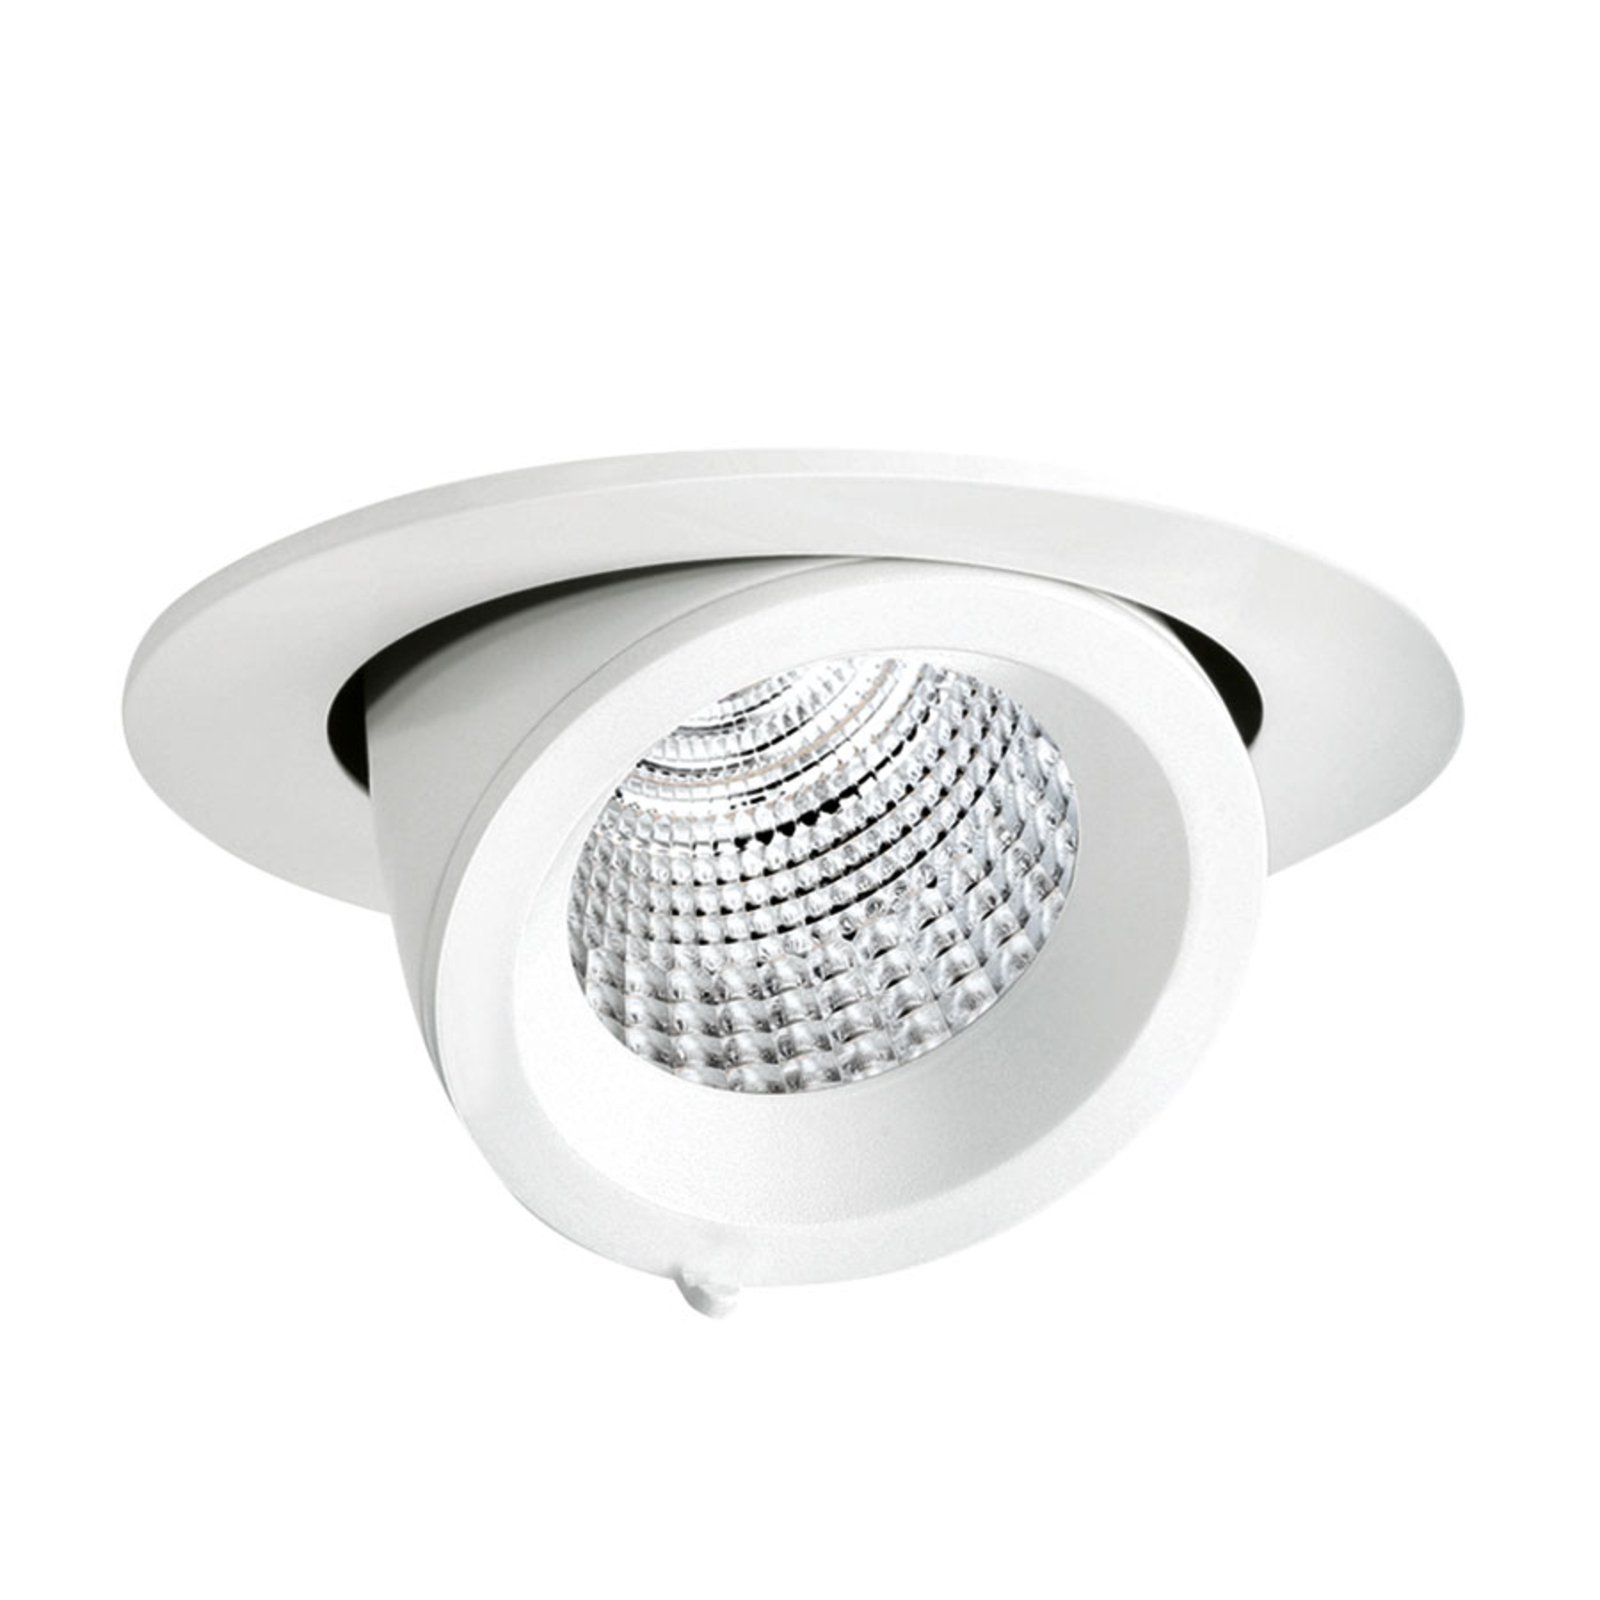 EB431 downlight LED spot reflector white 4,000 K